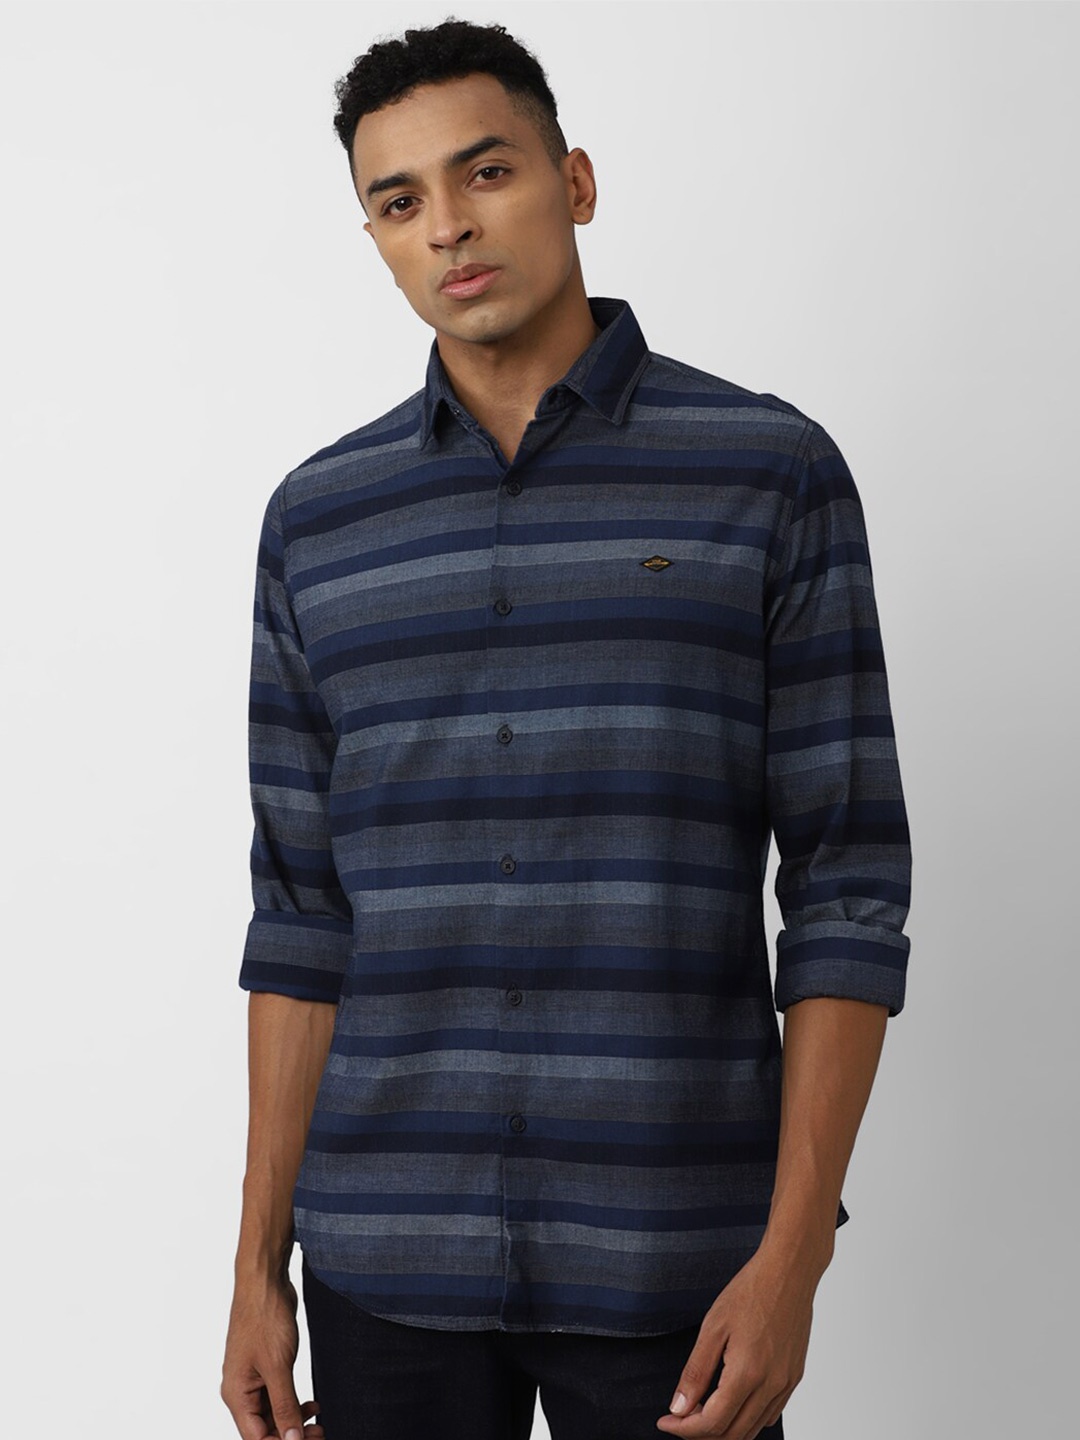 

VAN HEUSEN DENIM LABS Slim Fit Horizontal Striped Casual Pure Cotton Shirt, Navy blue